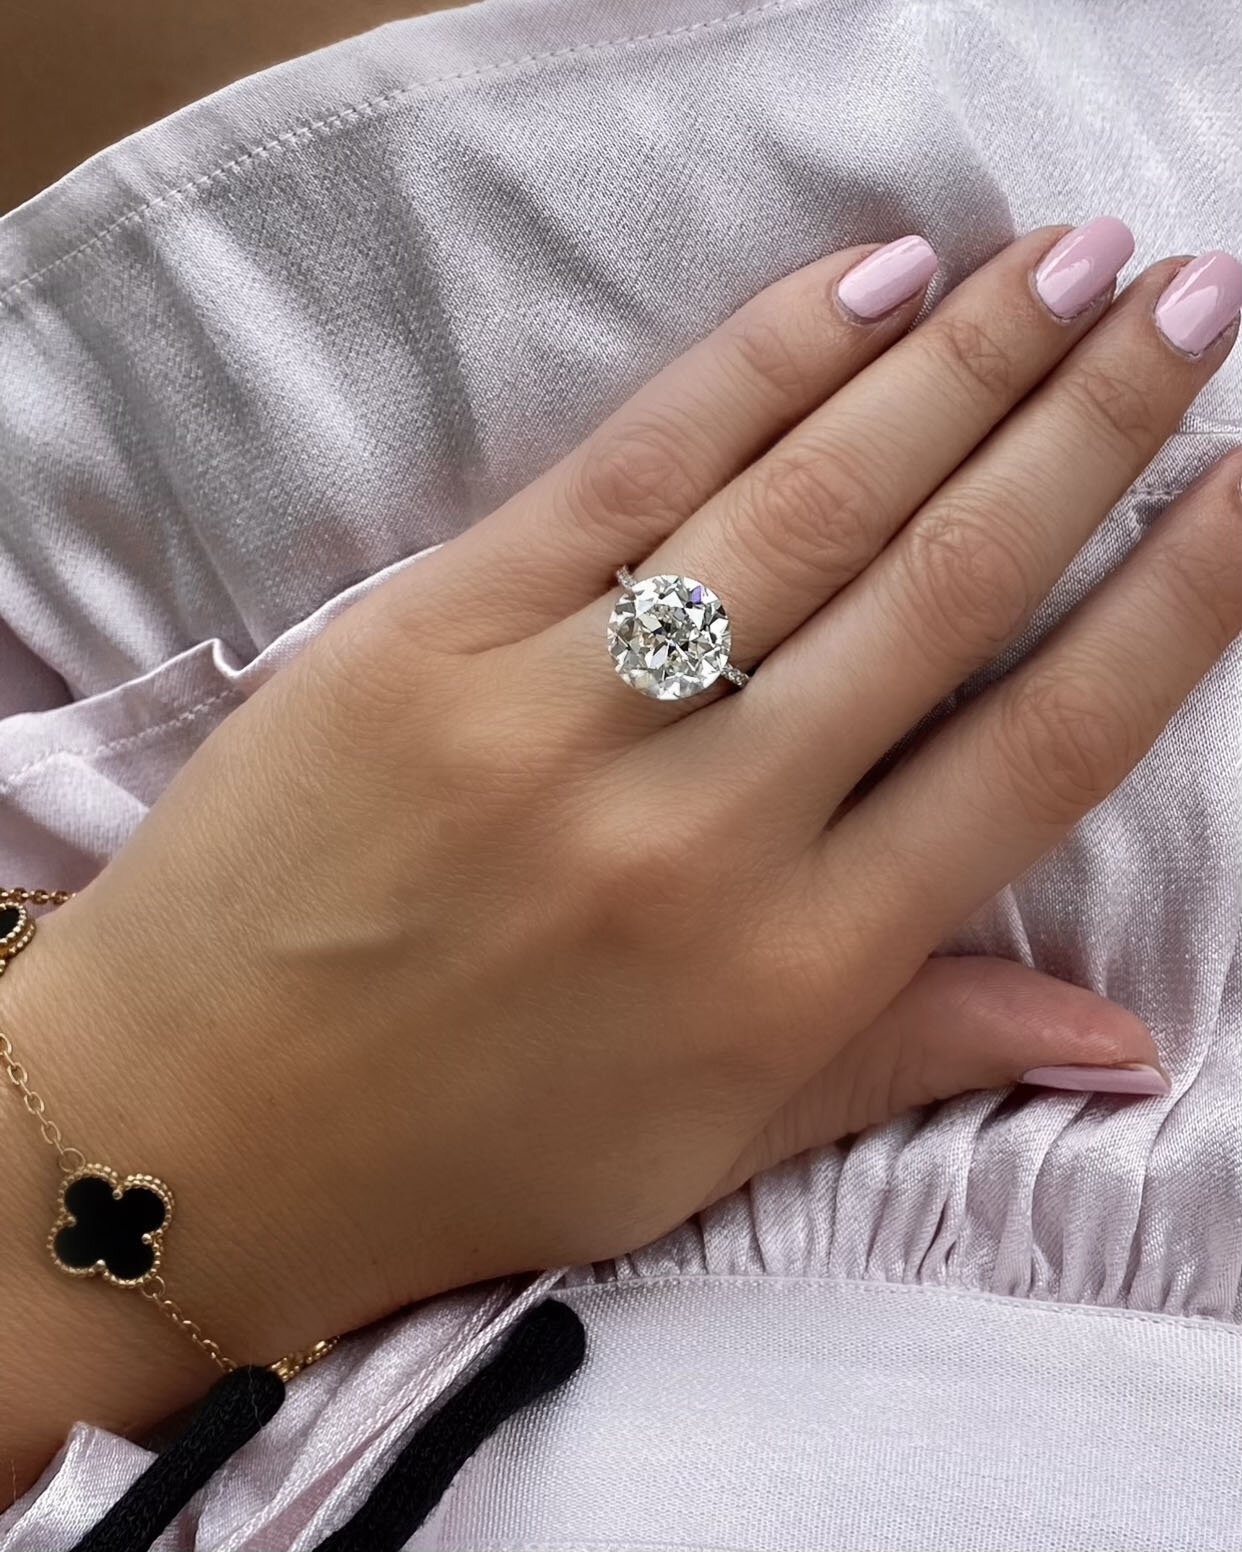 Amazing Art Deco 6 Carat Diamond Ring w/Sapphires 6.10ct QR/VVS2 GIA